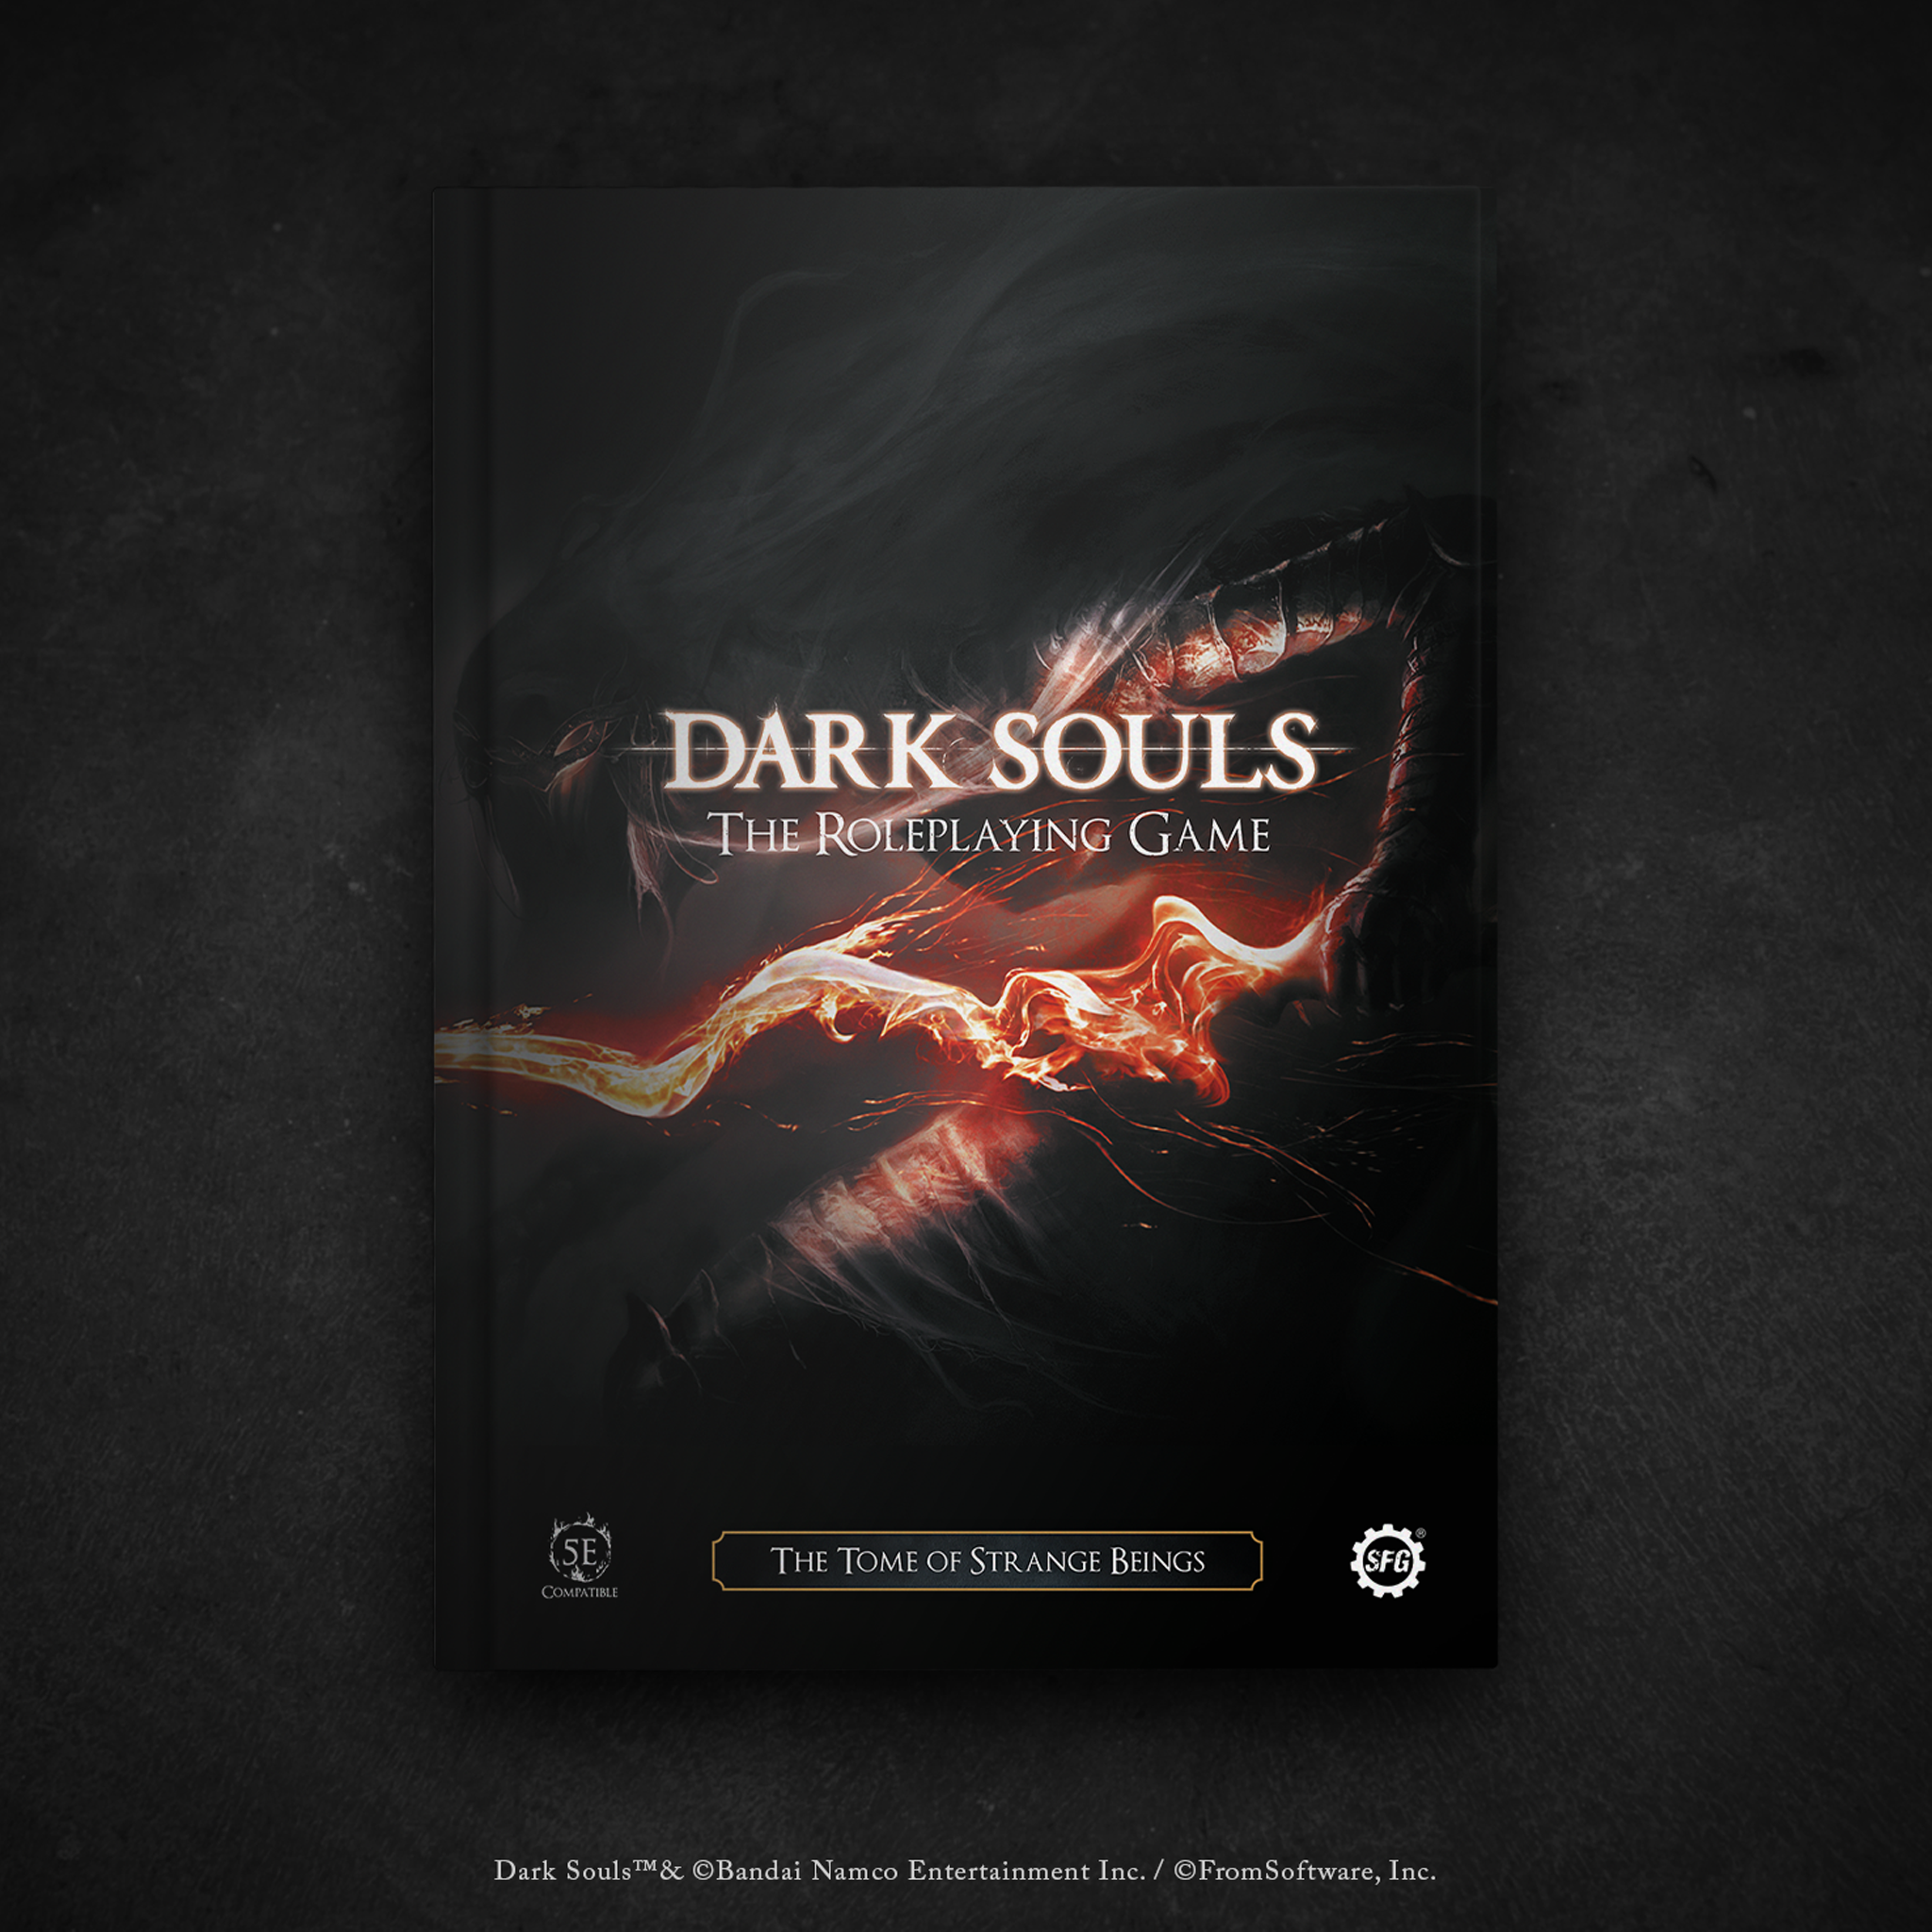 Dark Souls II - In Depth Leveling Guide & Stats Explanation 